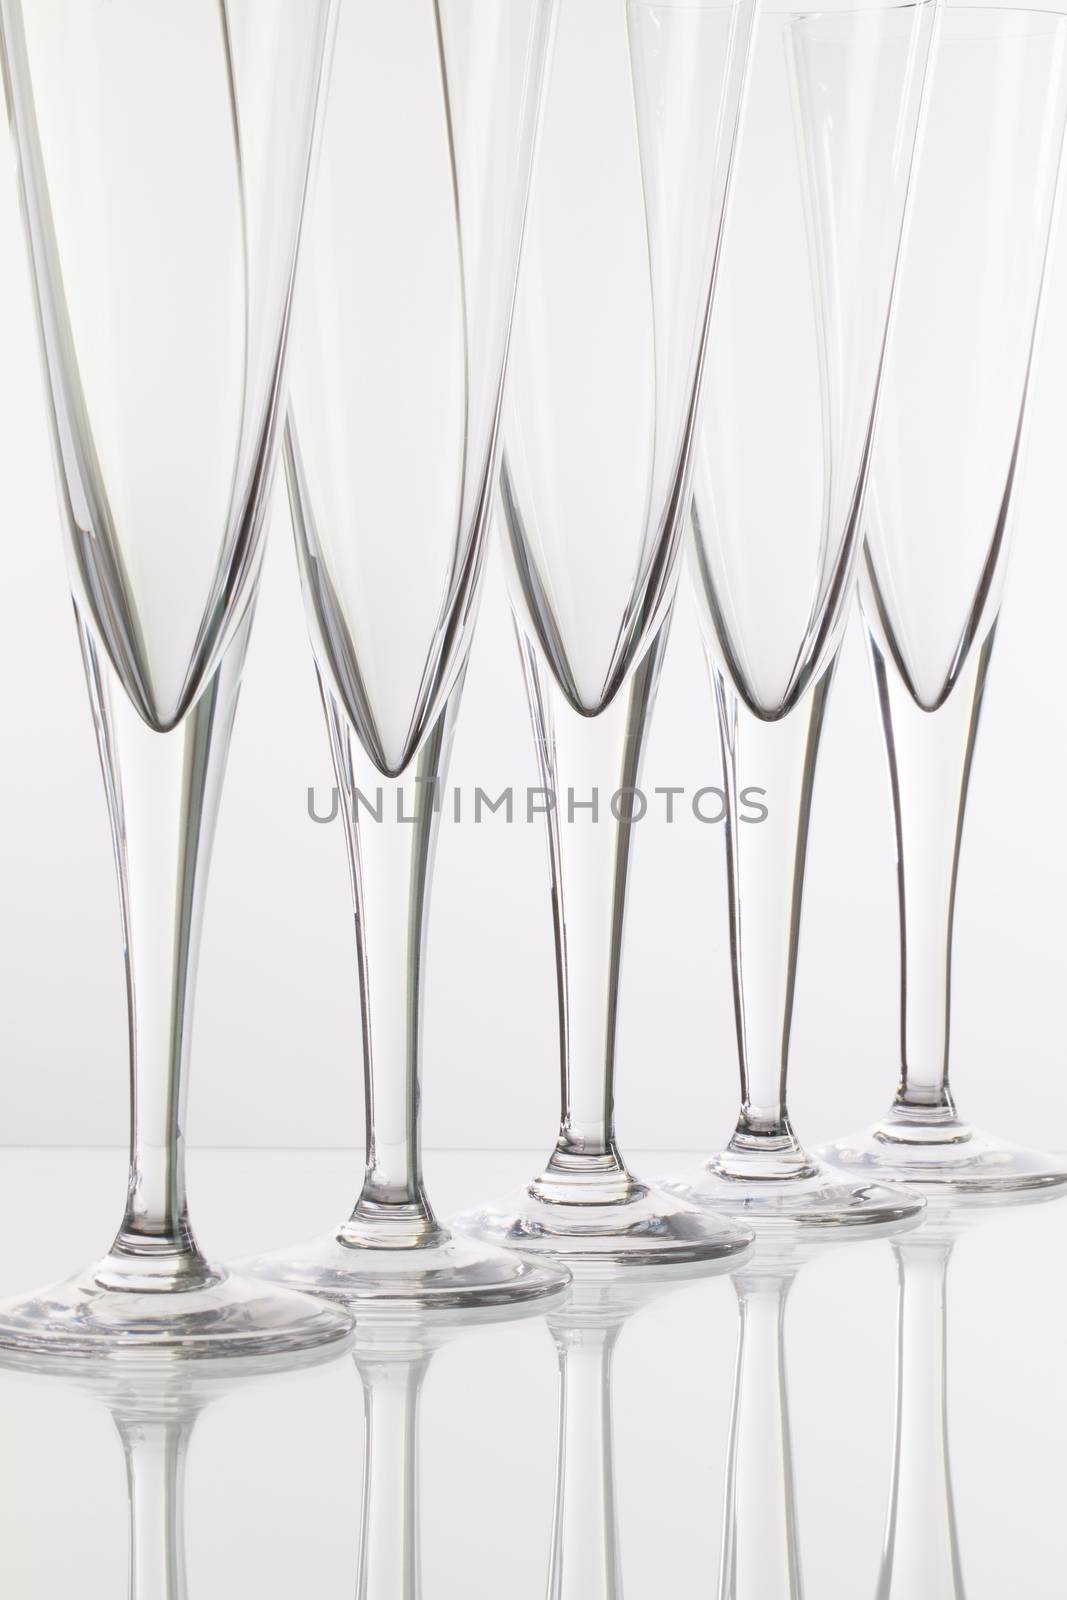 Empty champagne glasses on the glass desk